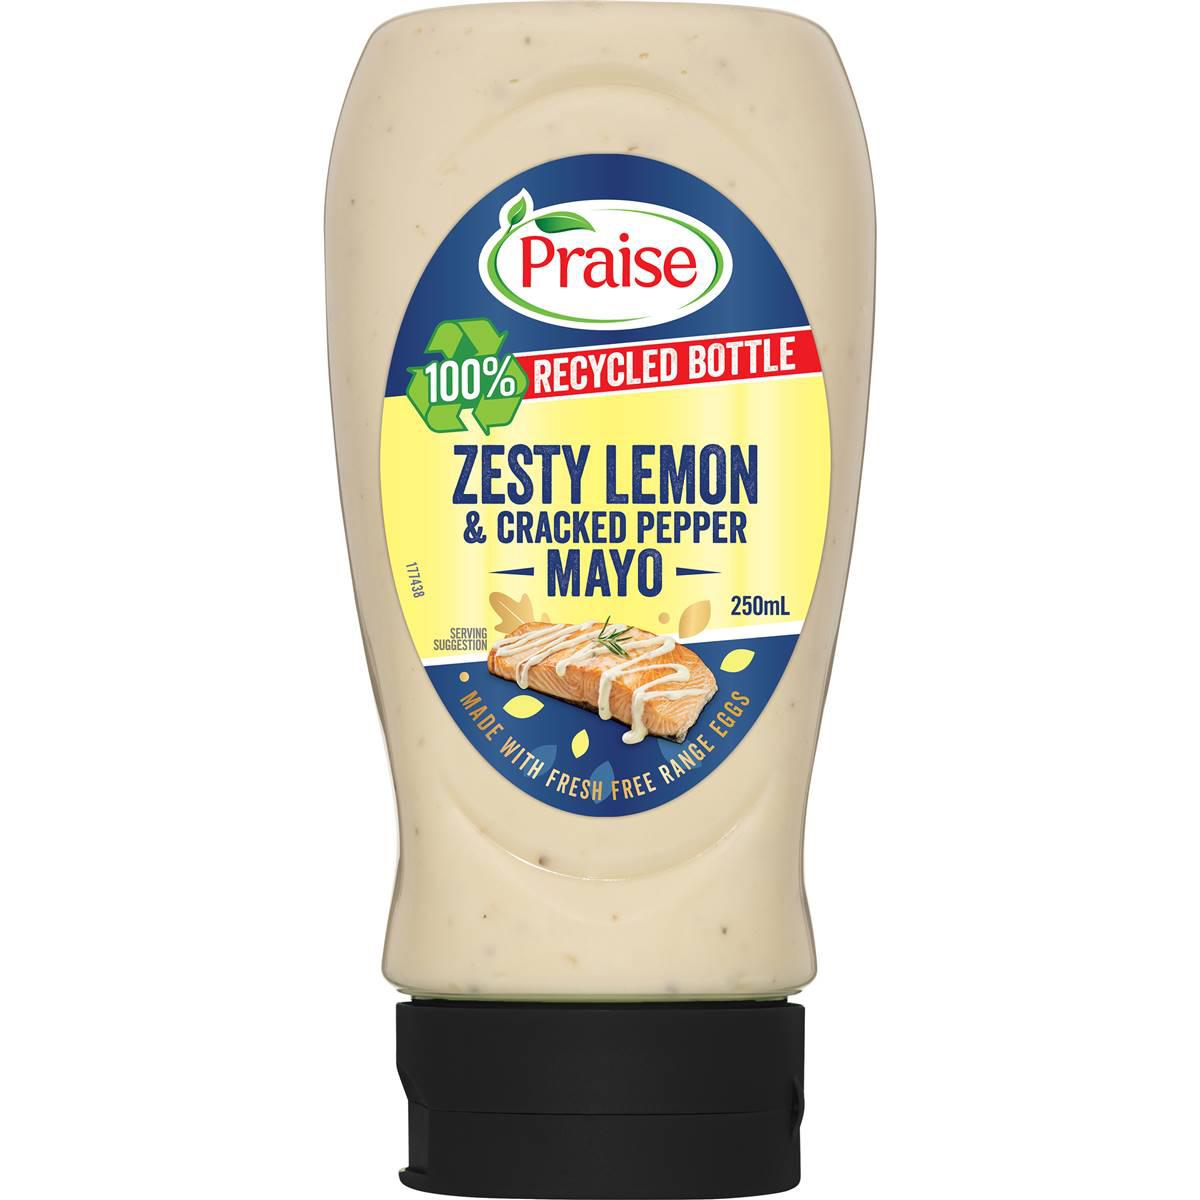 Praise Zesty Lemon & Cracked Pepper Mayo 250ml